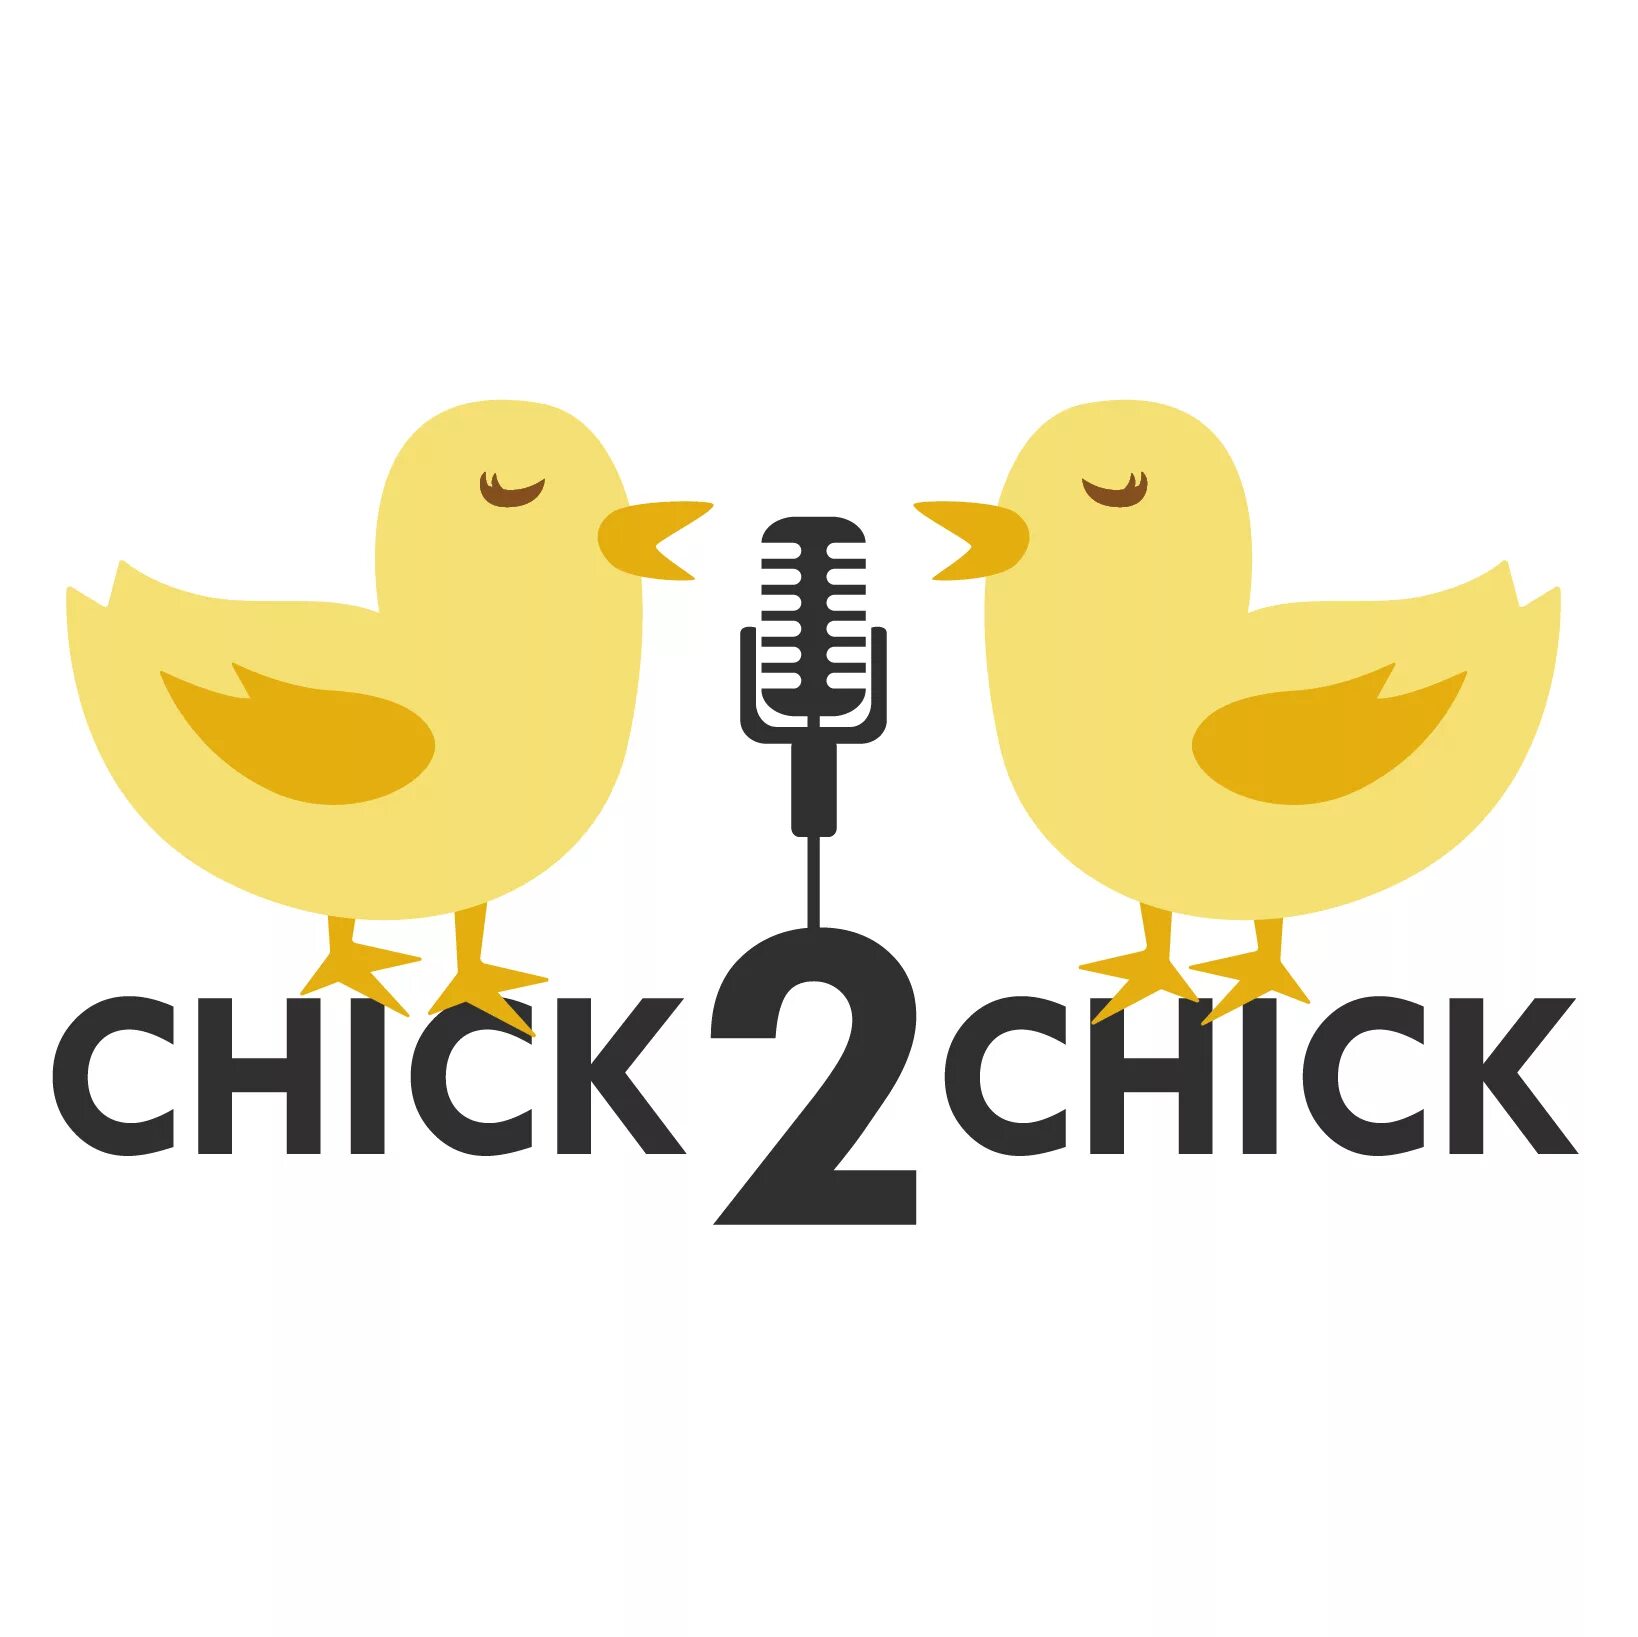 2 chicks. Two chicks бренд. Big chick. Chick Company. Two chicks напиток.